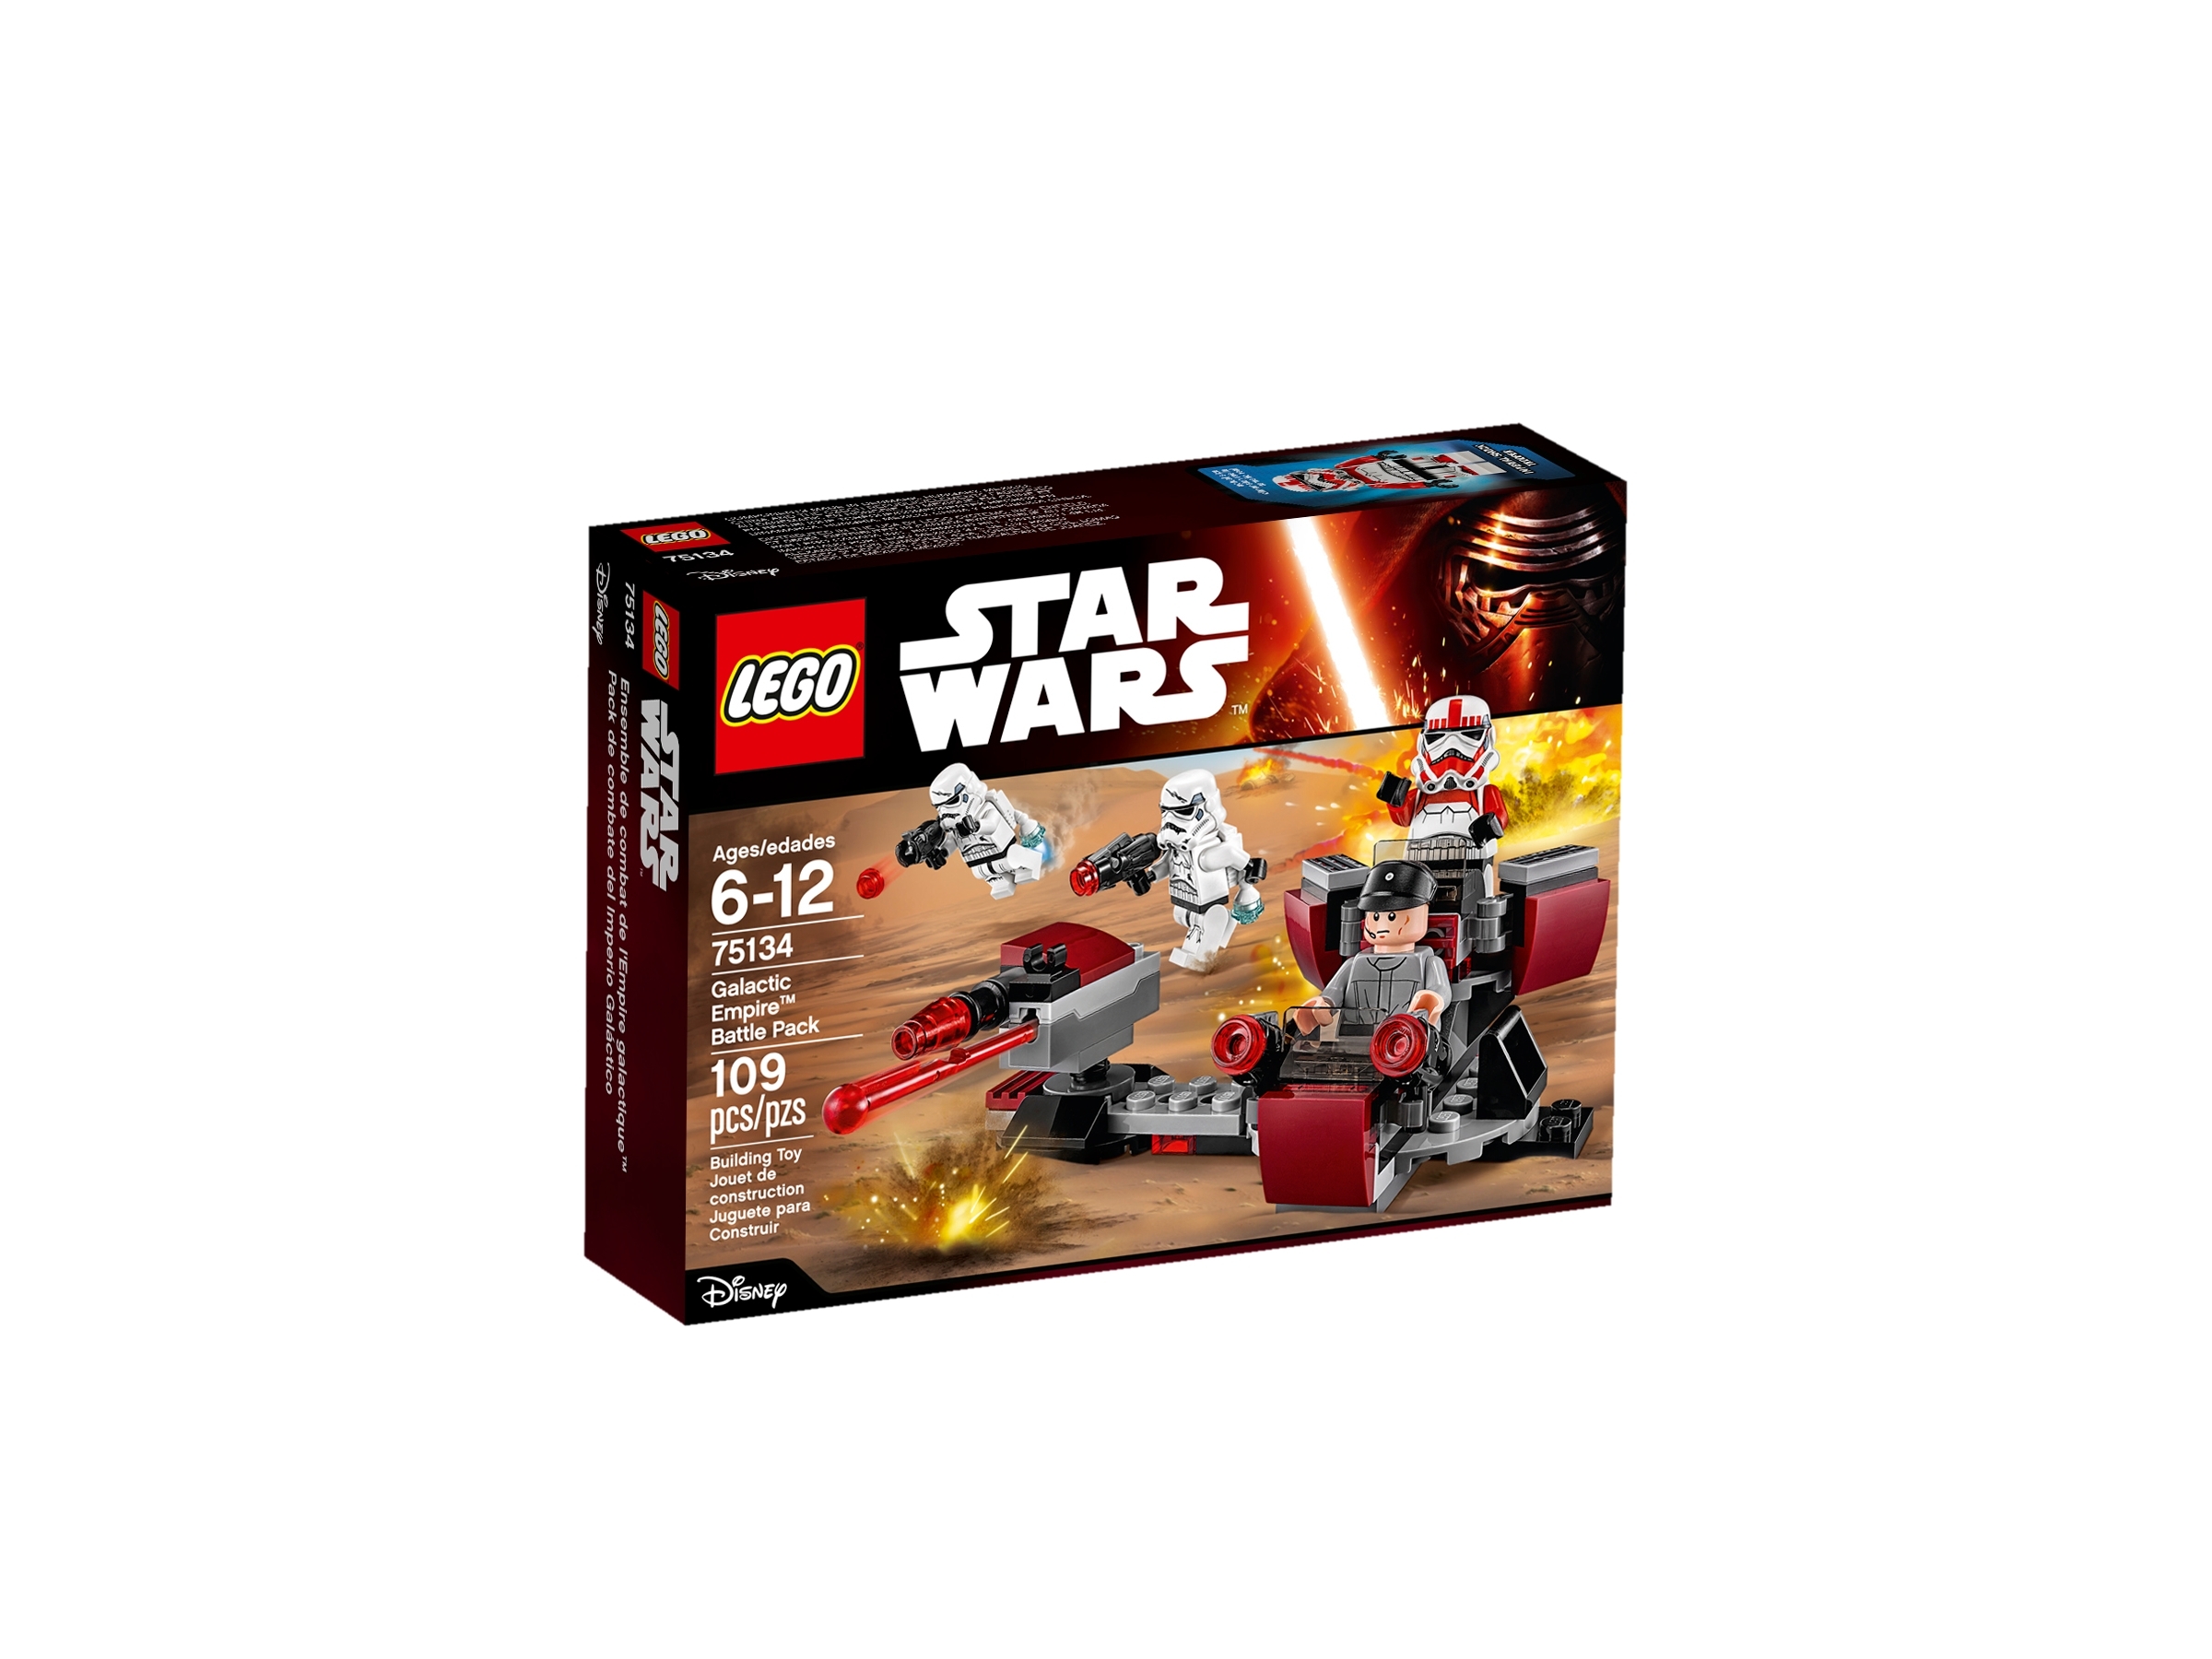 versione estesa dal Set 75134 * NUOVO * LEGO Star Wars 4 x tiro Blaster 